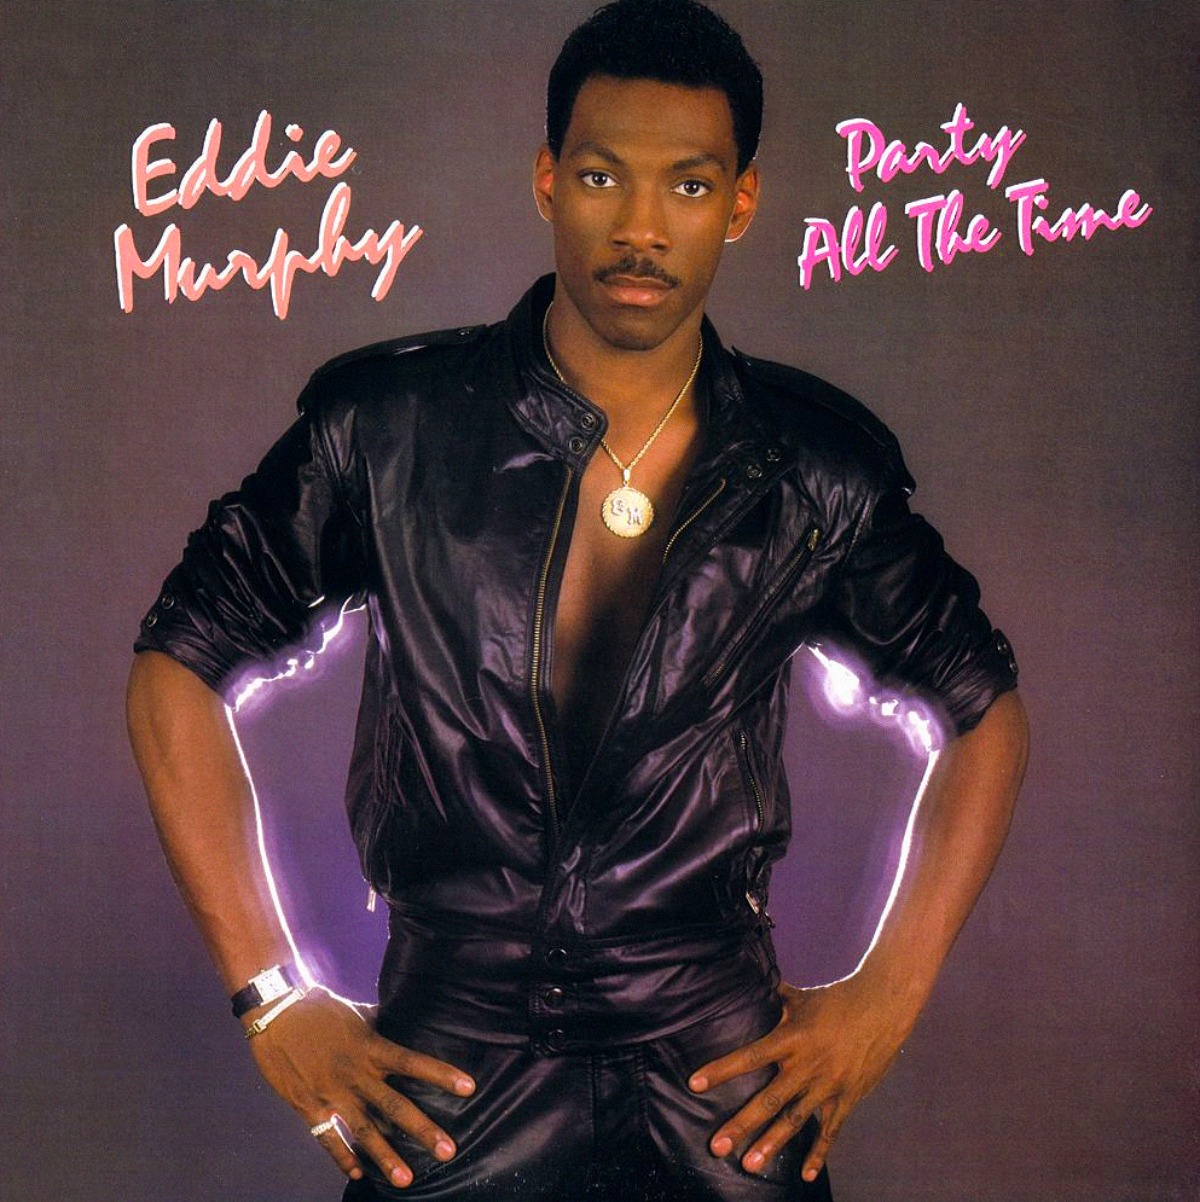 Capa do single "Party All the Time" de Eddie Murphy